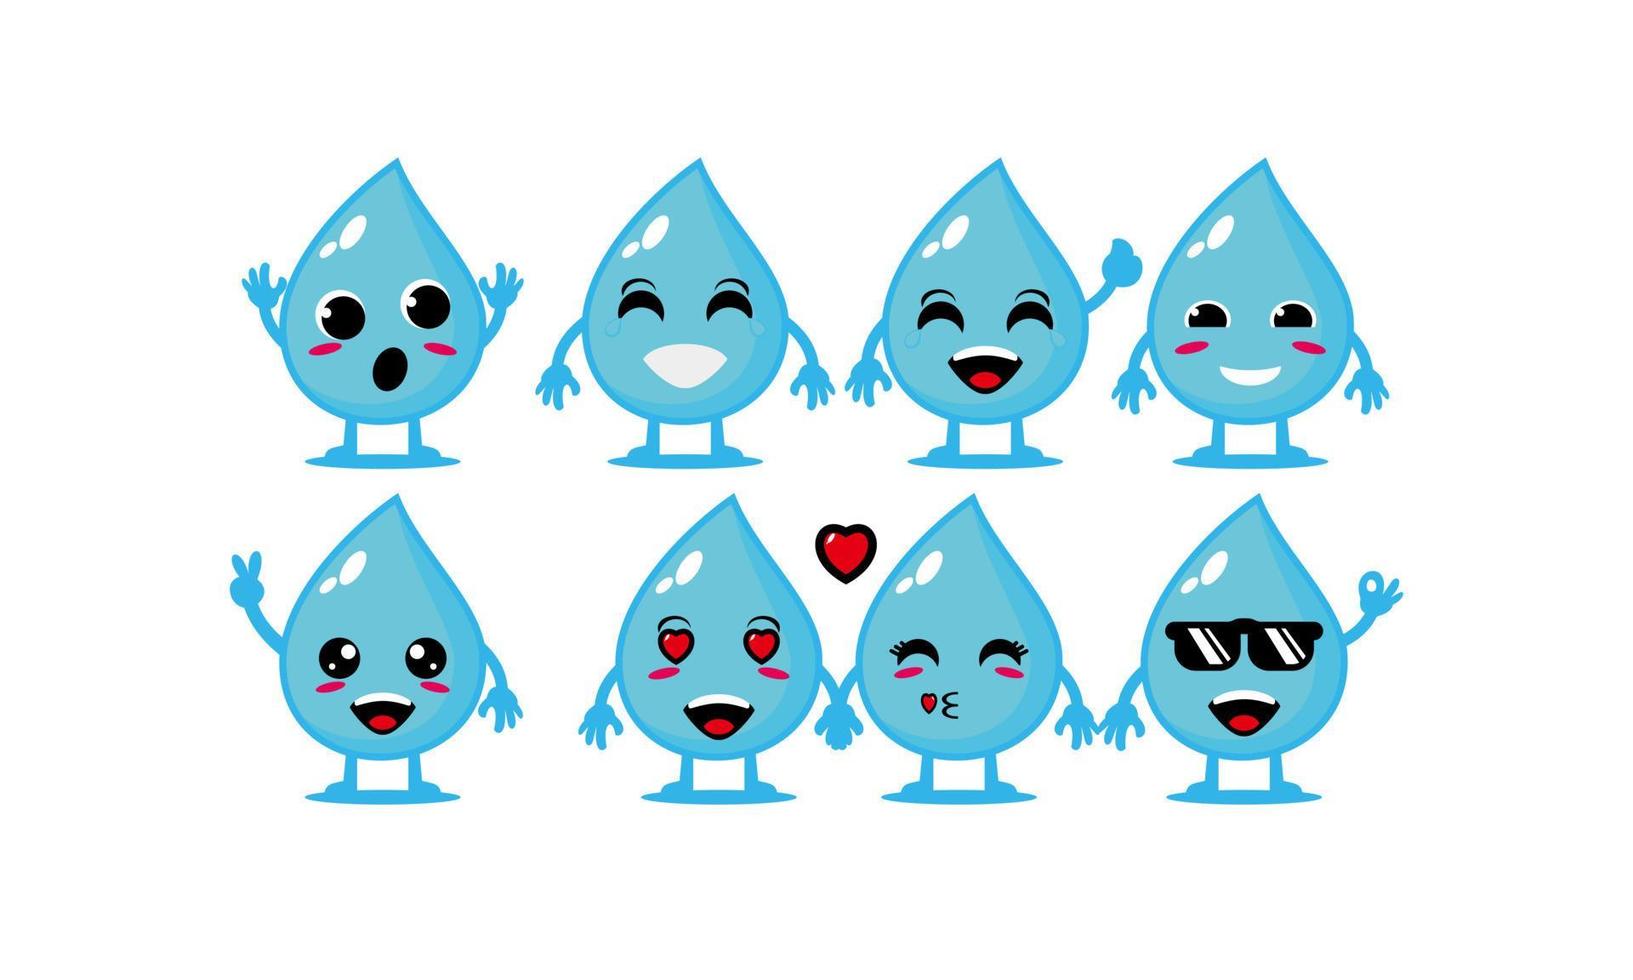 lindo sonriente aqua gota de agua set colección.vector caricatura plana cara personaje mascota ilustración .aislado sobre fondo blanco vector